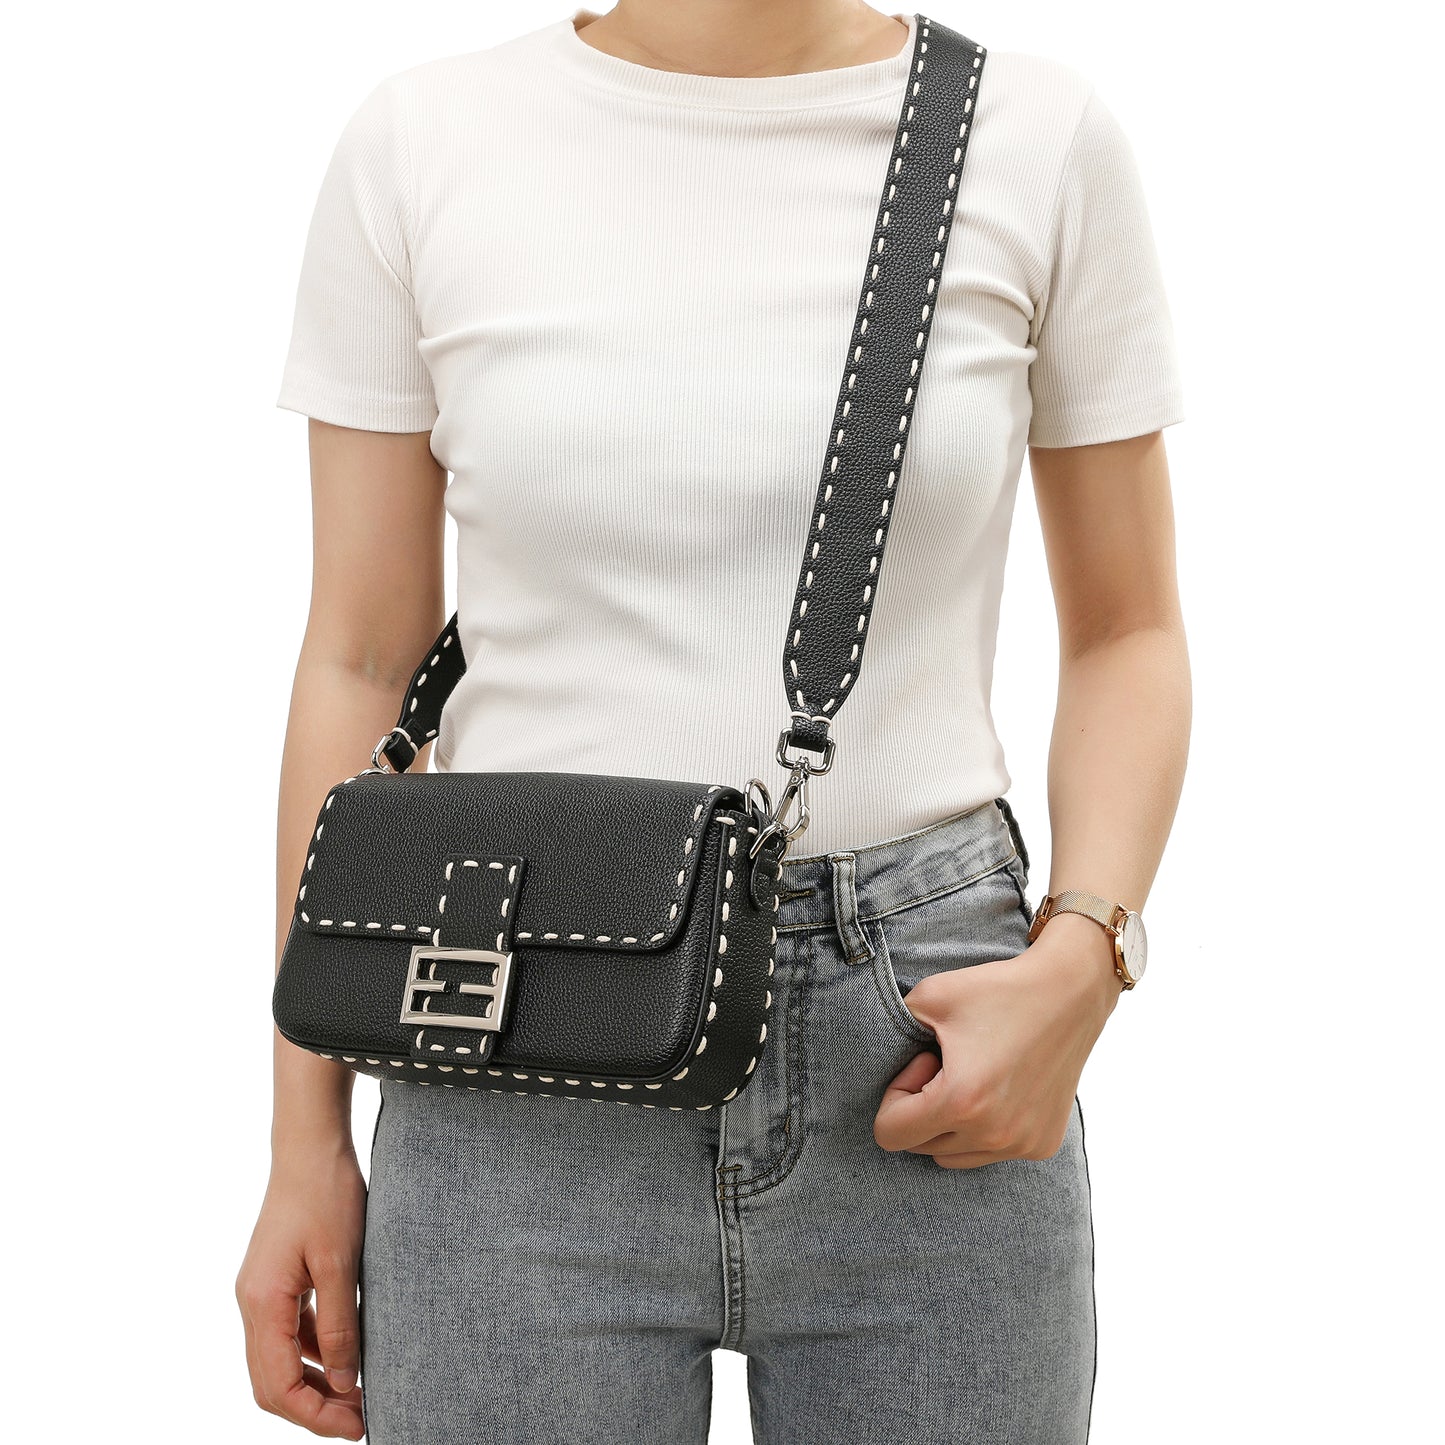 Full-grain Leather Crossboby/ Shoulder Bag